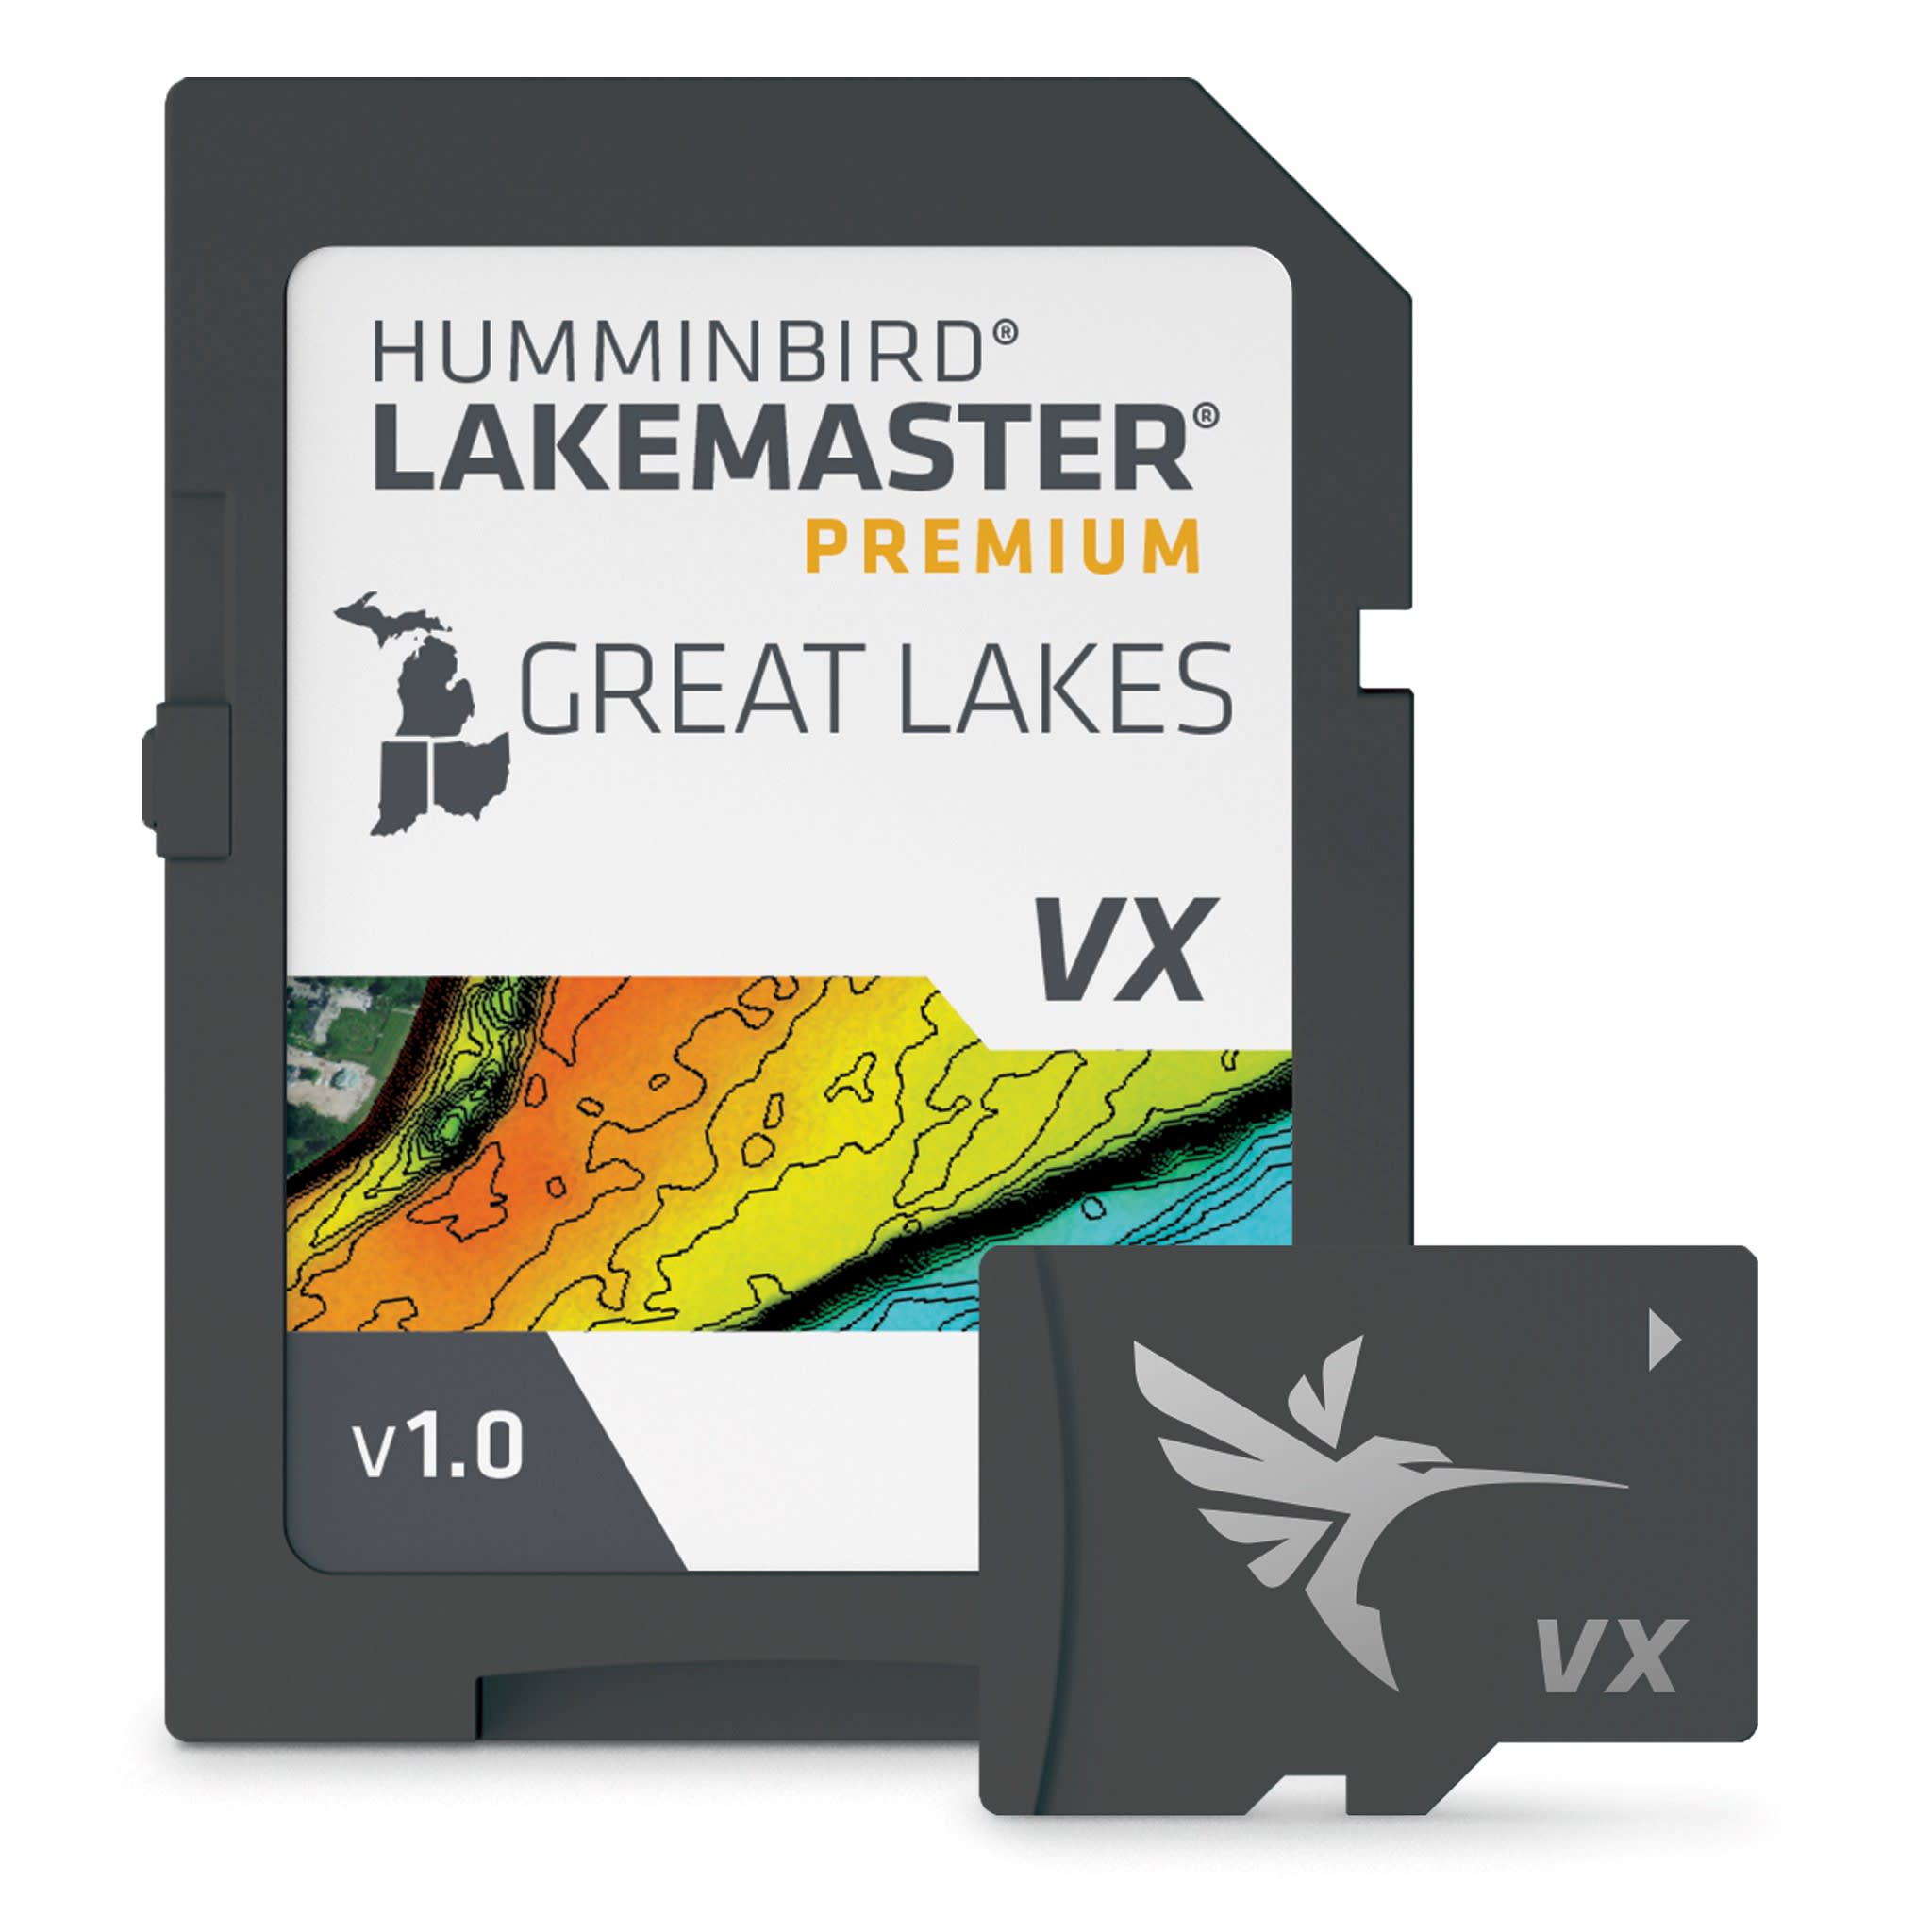 Humminbird® LakeMaster® VX Premium - Great Lakes